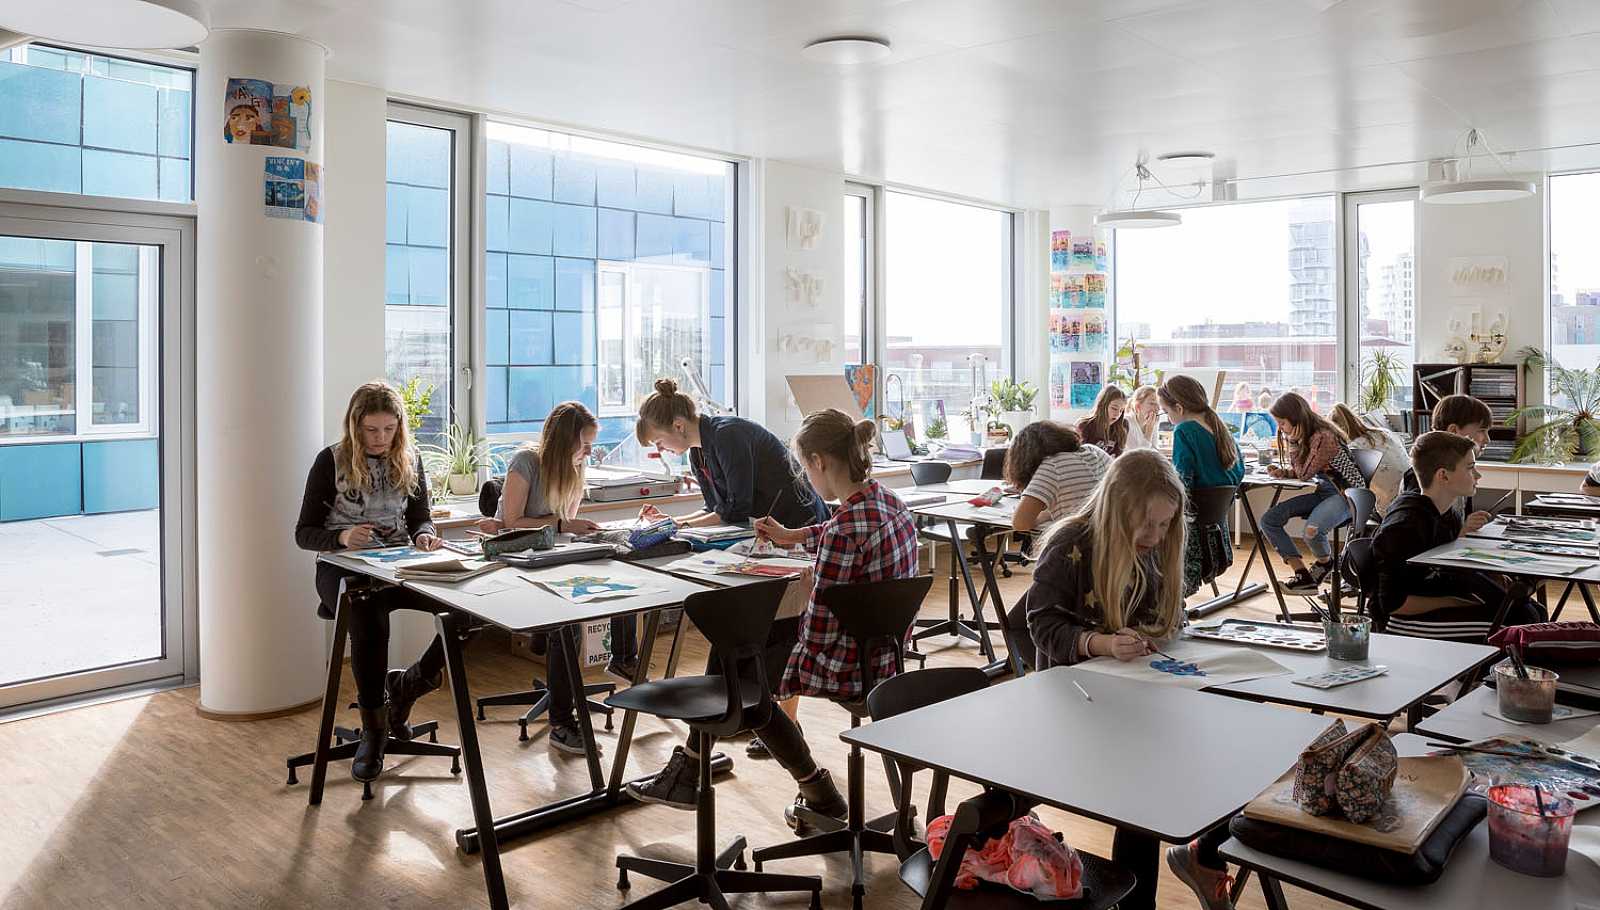 A classroom inside the Copenhagen International School Nordhavn.